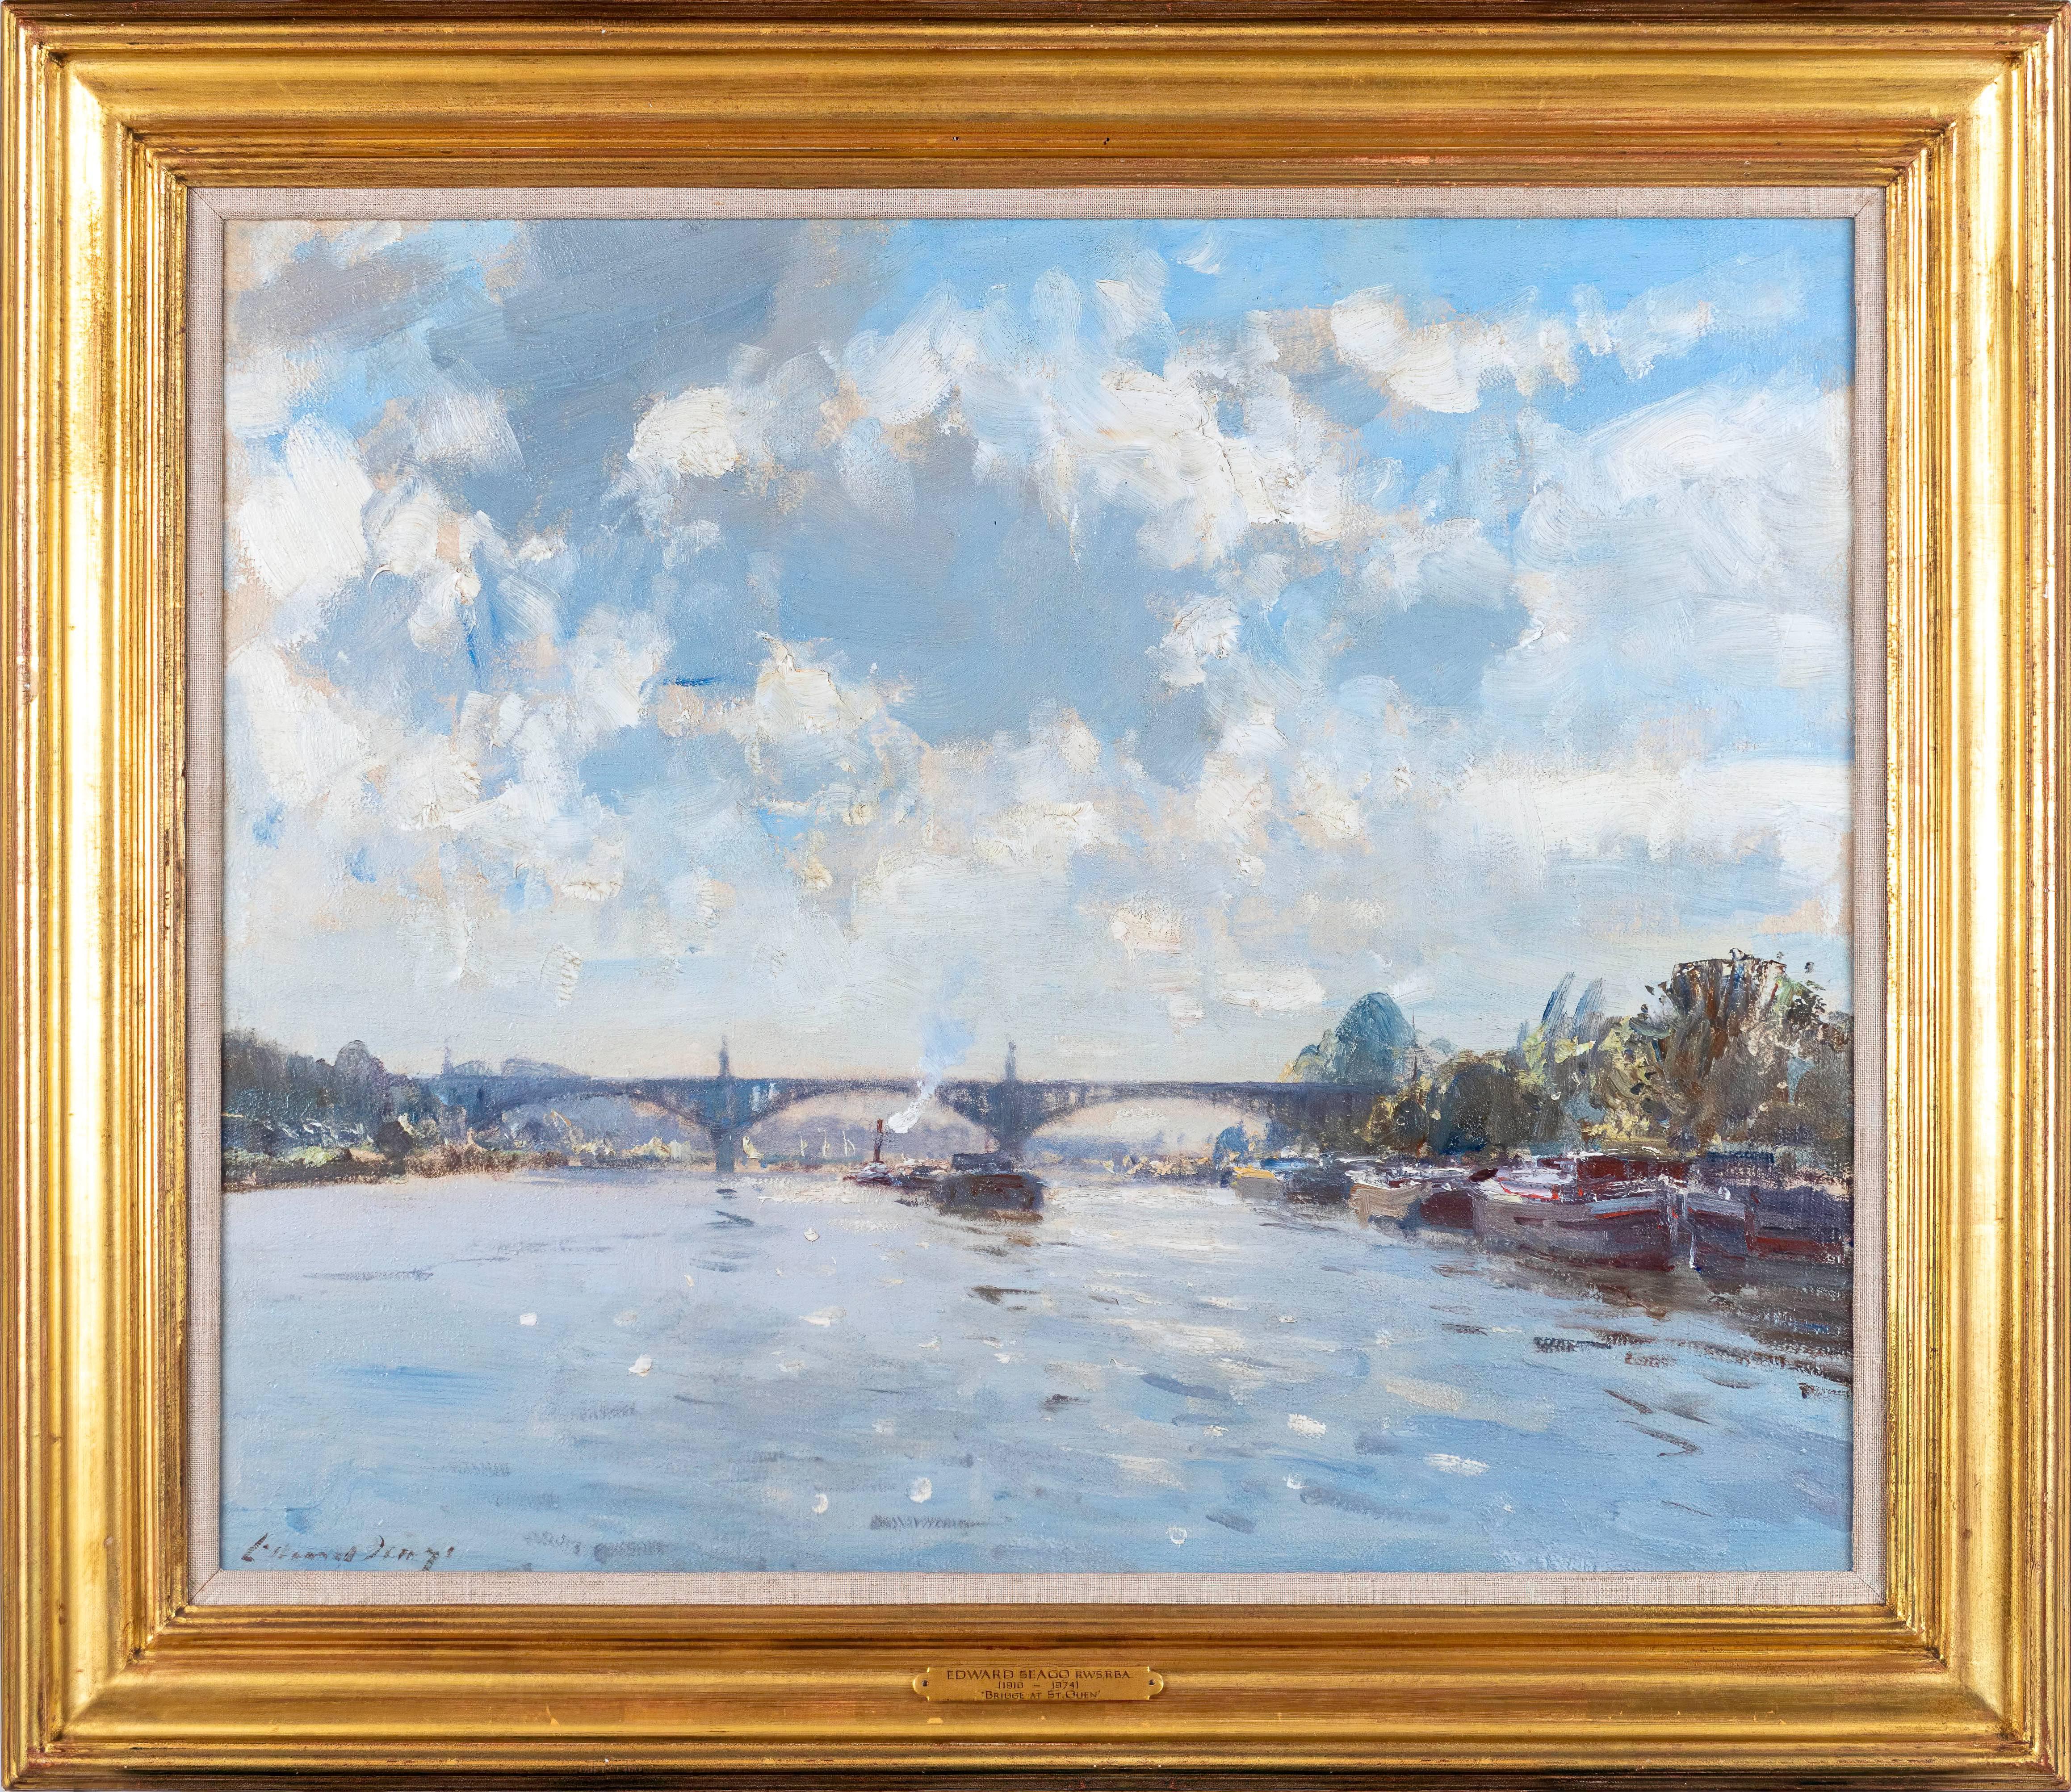 Edward Seago Landscape Painting - 'Bridge at St. Oeun' Landscape painting of a river, bridge and architecture. 